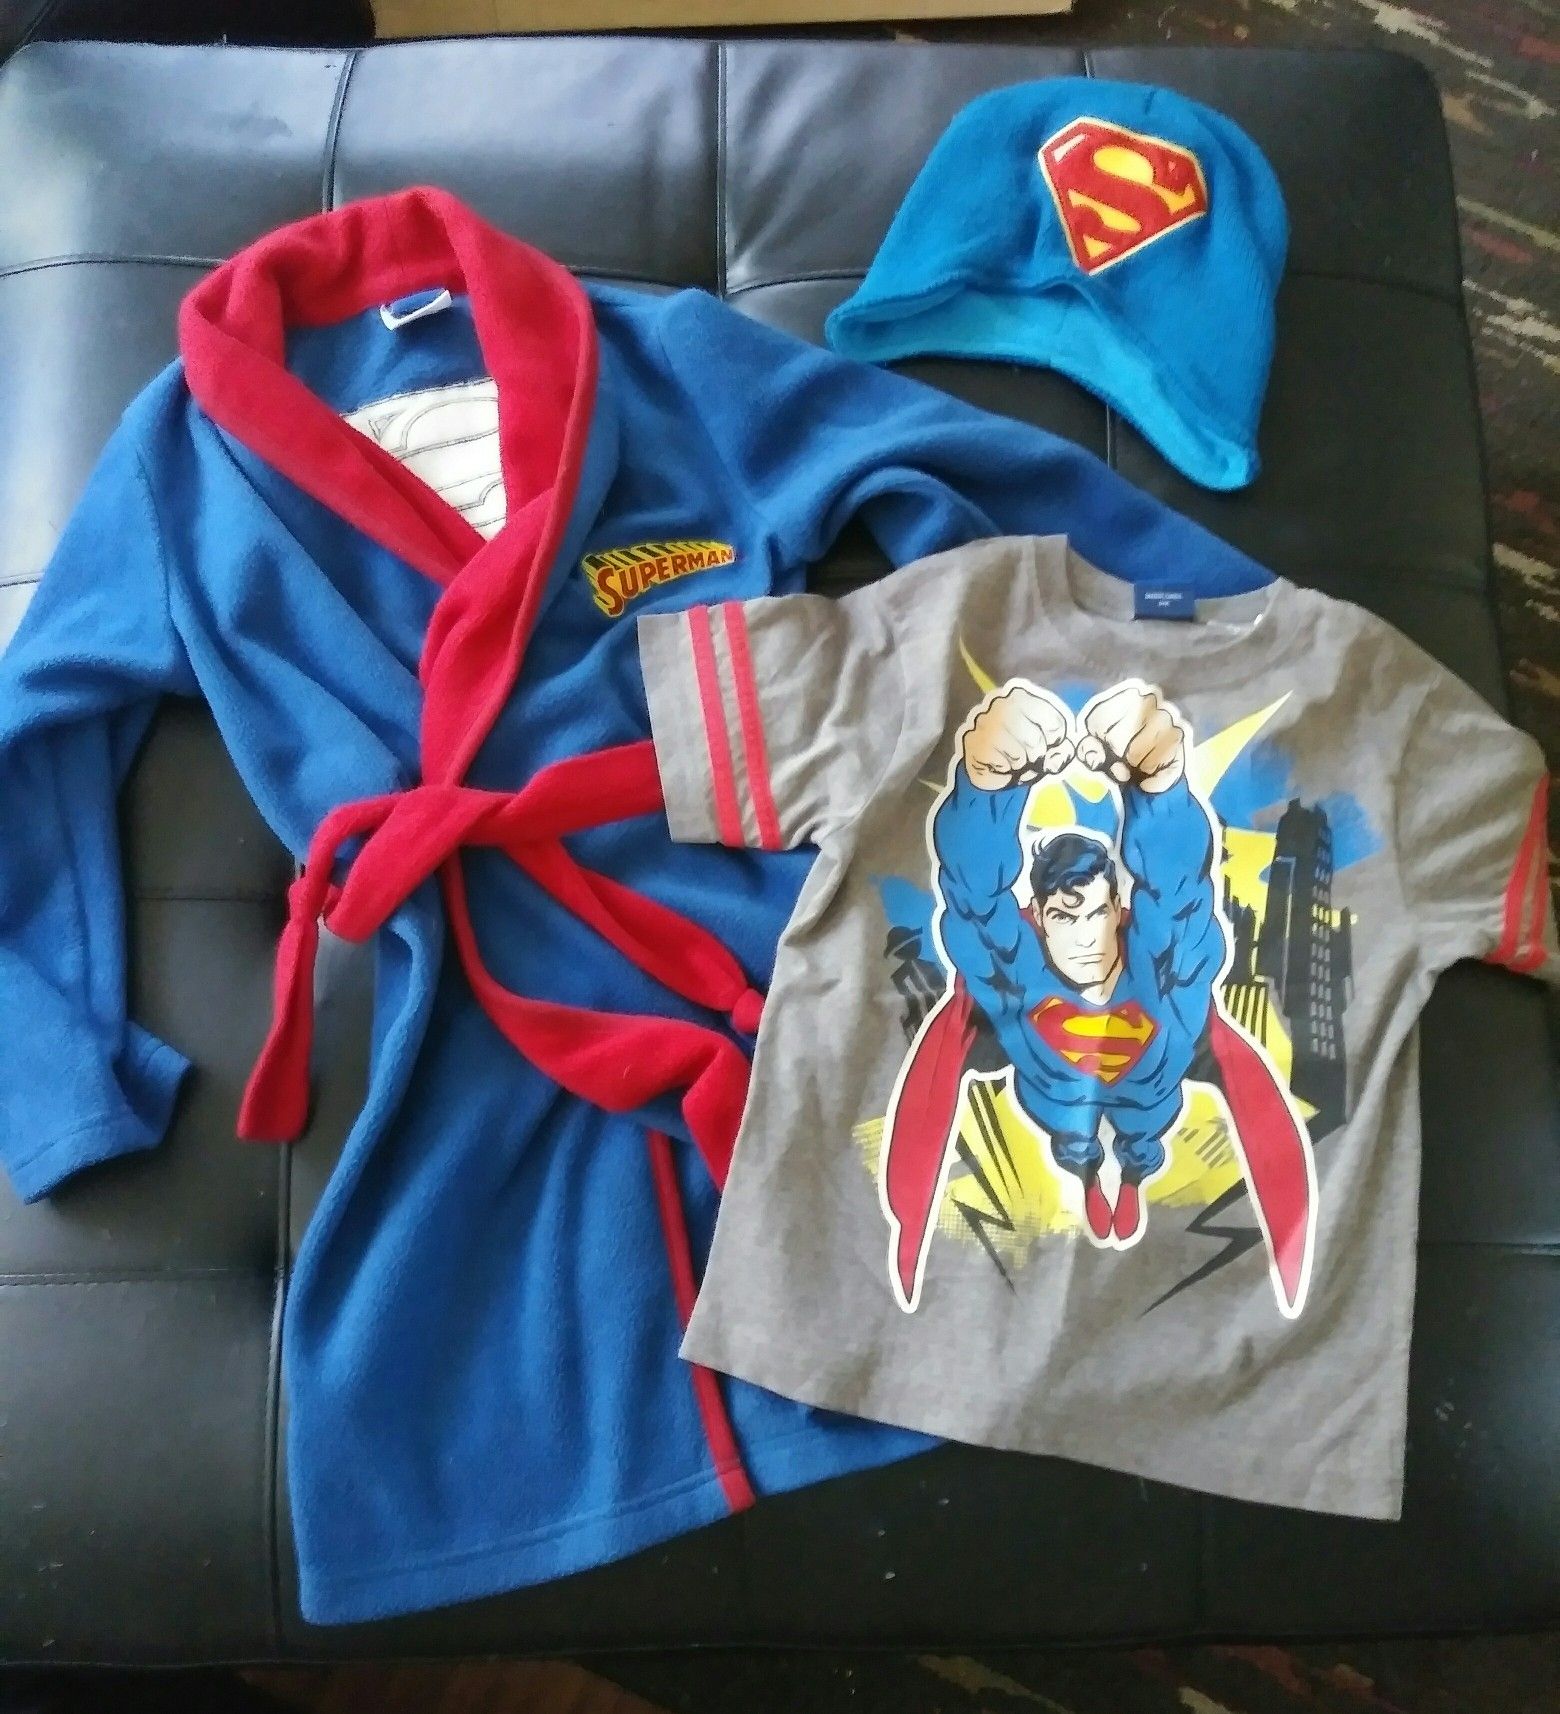 Superman robe, Shirt & Winter hat. - size 6/7